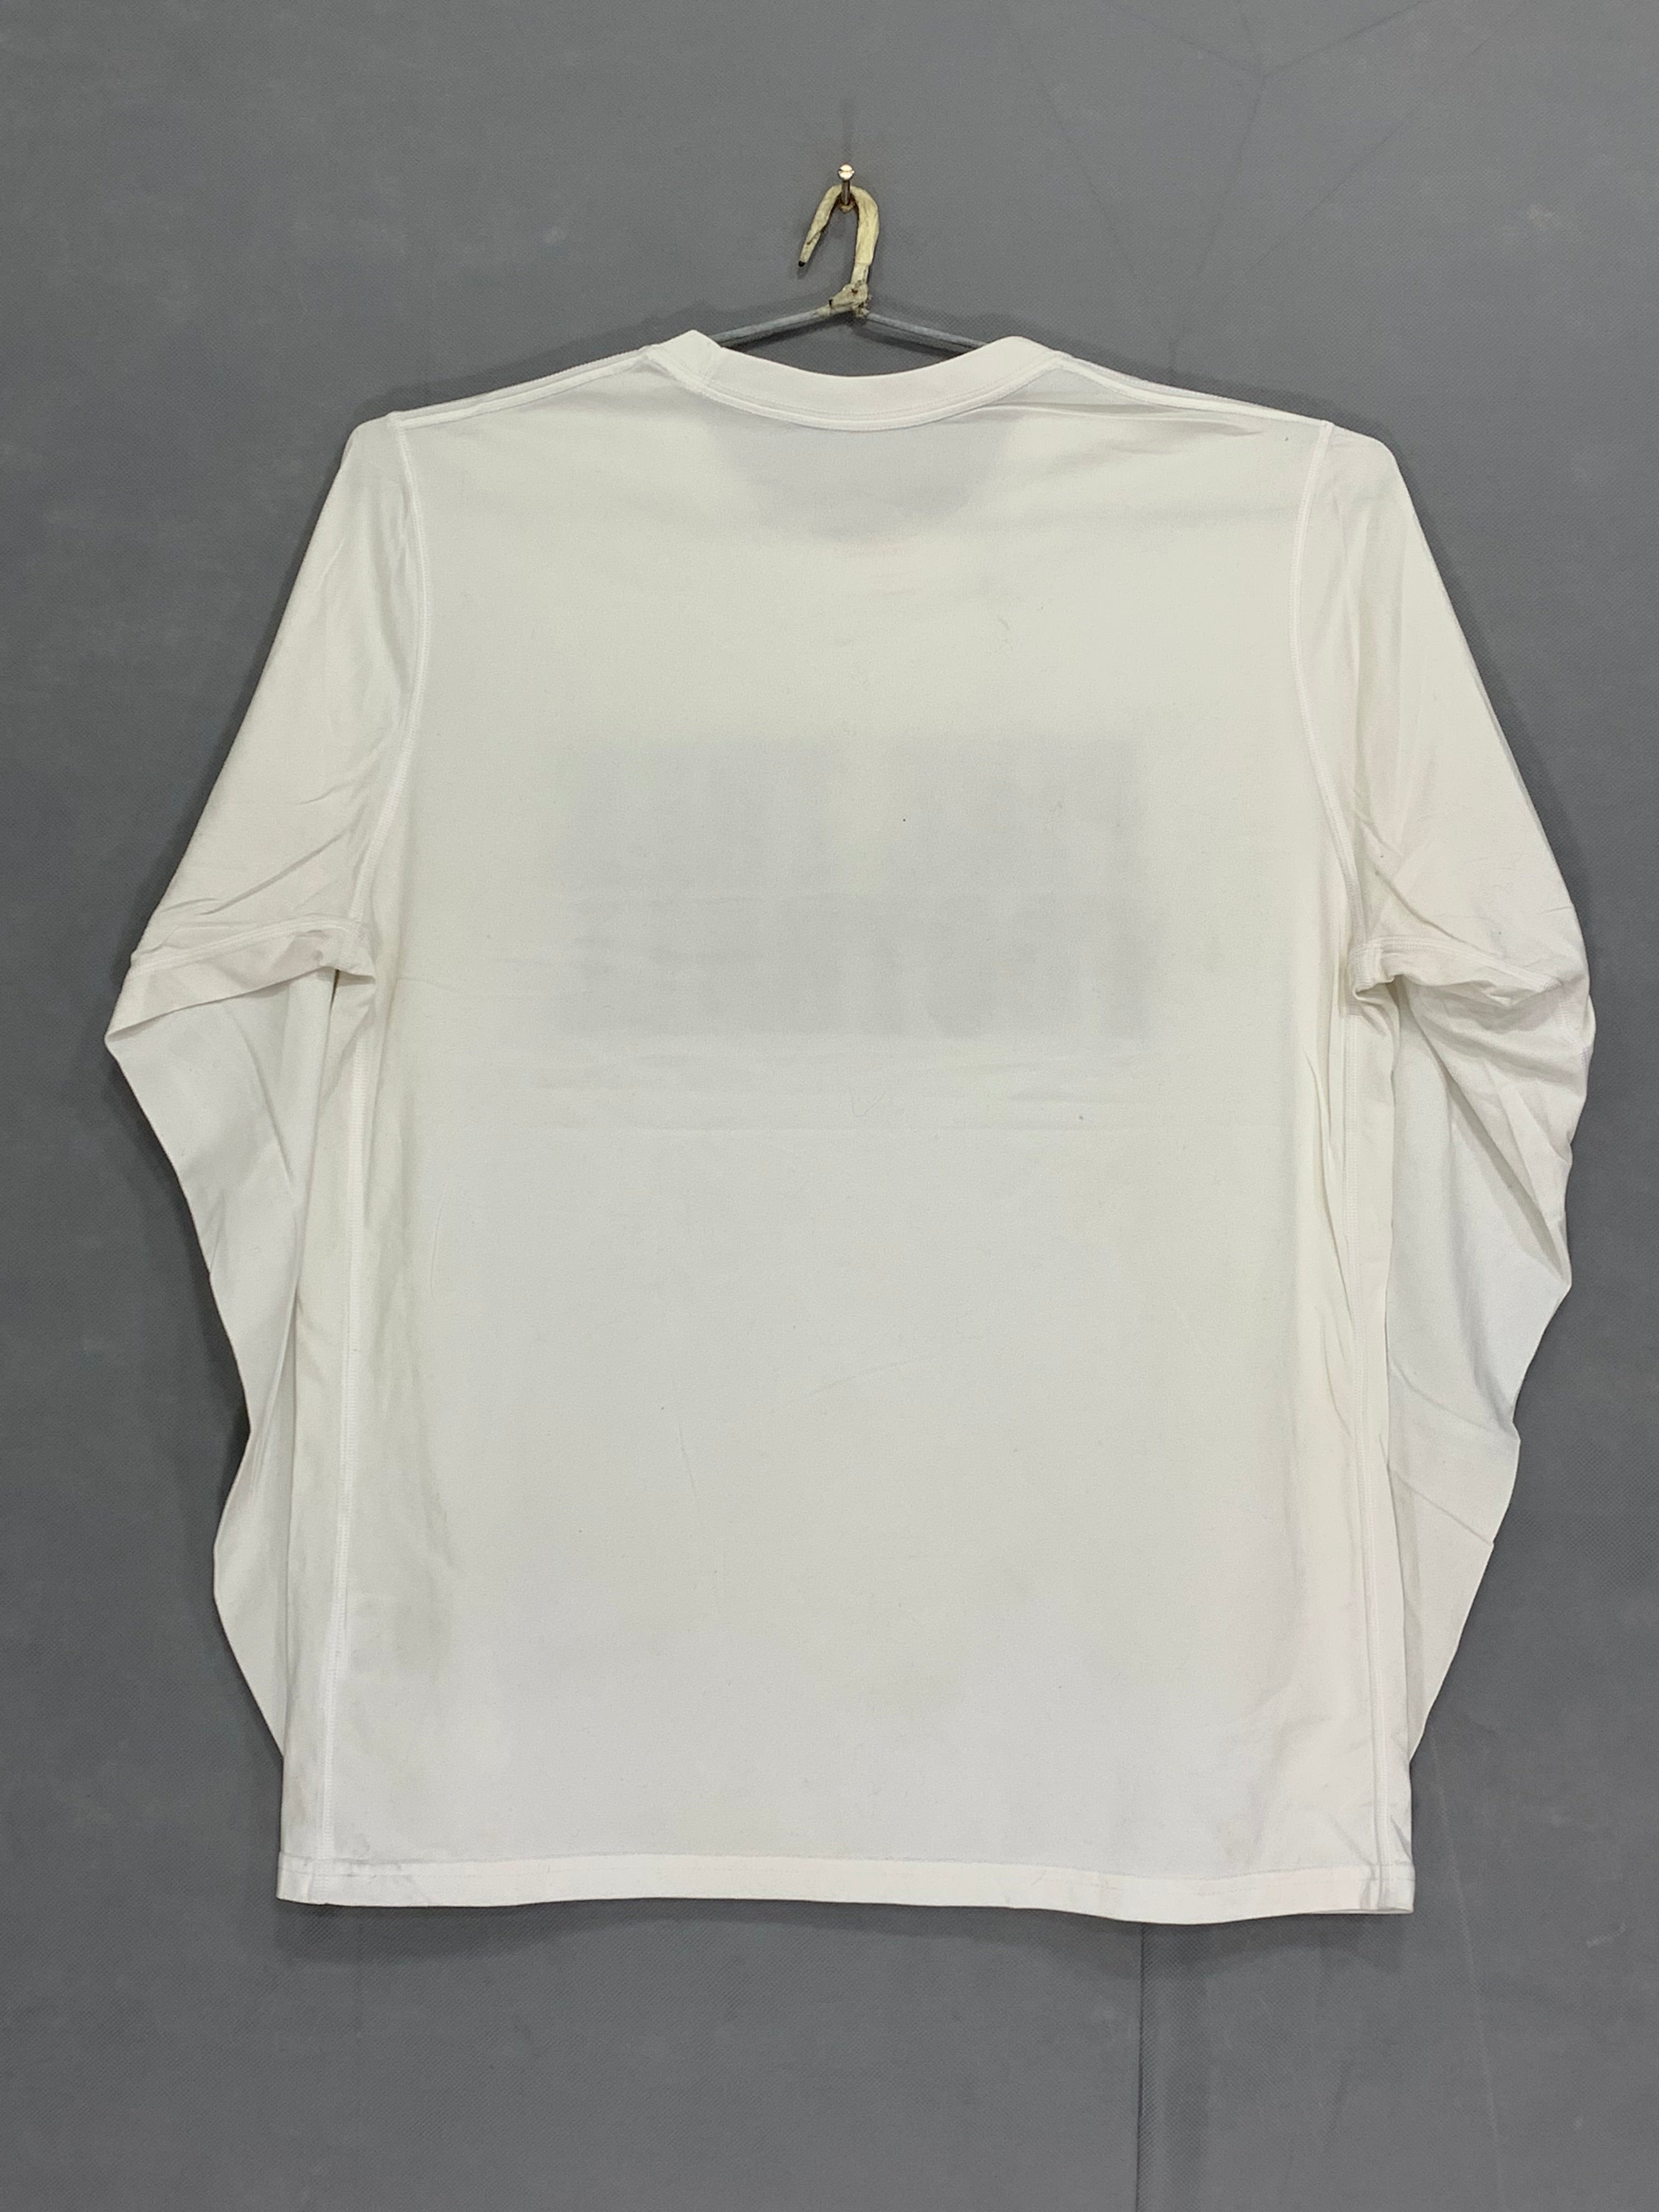 Nike Dri Fit Branded Original Cotton T Shirt For Men